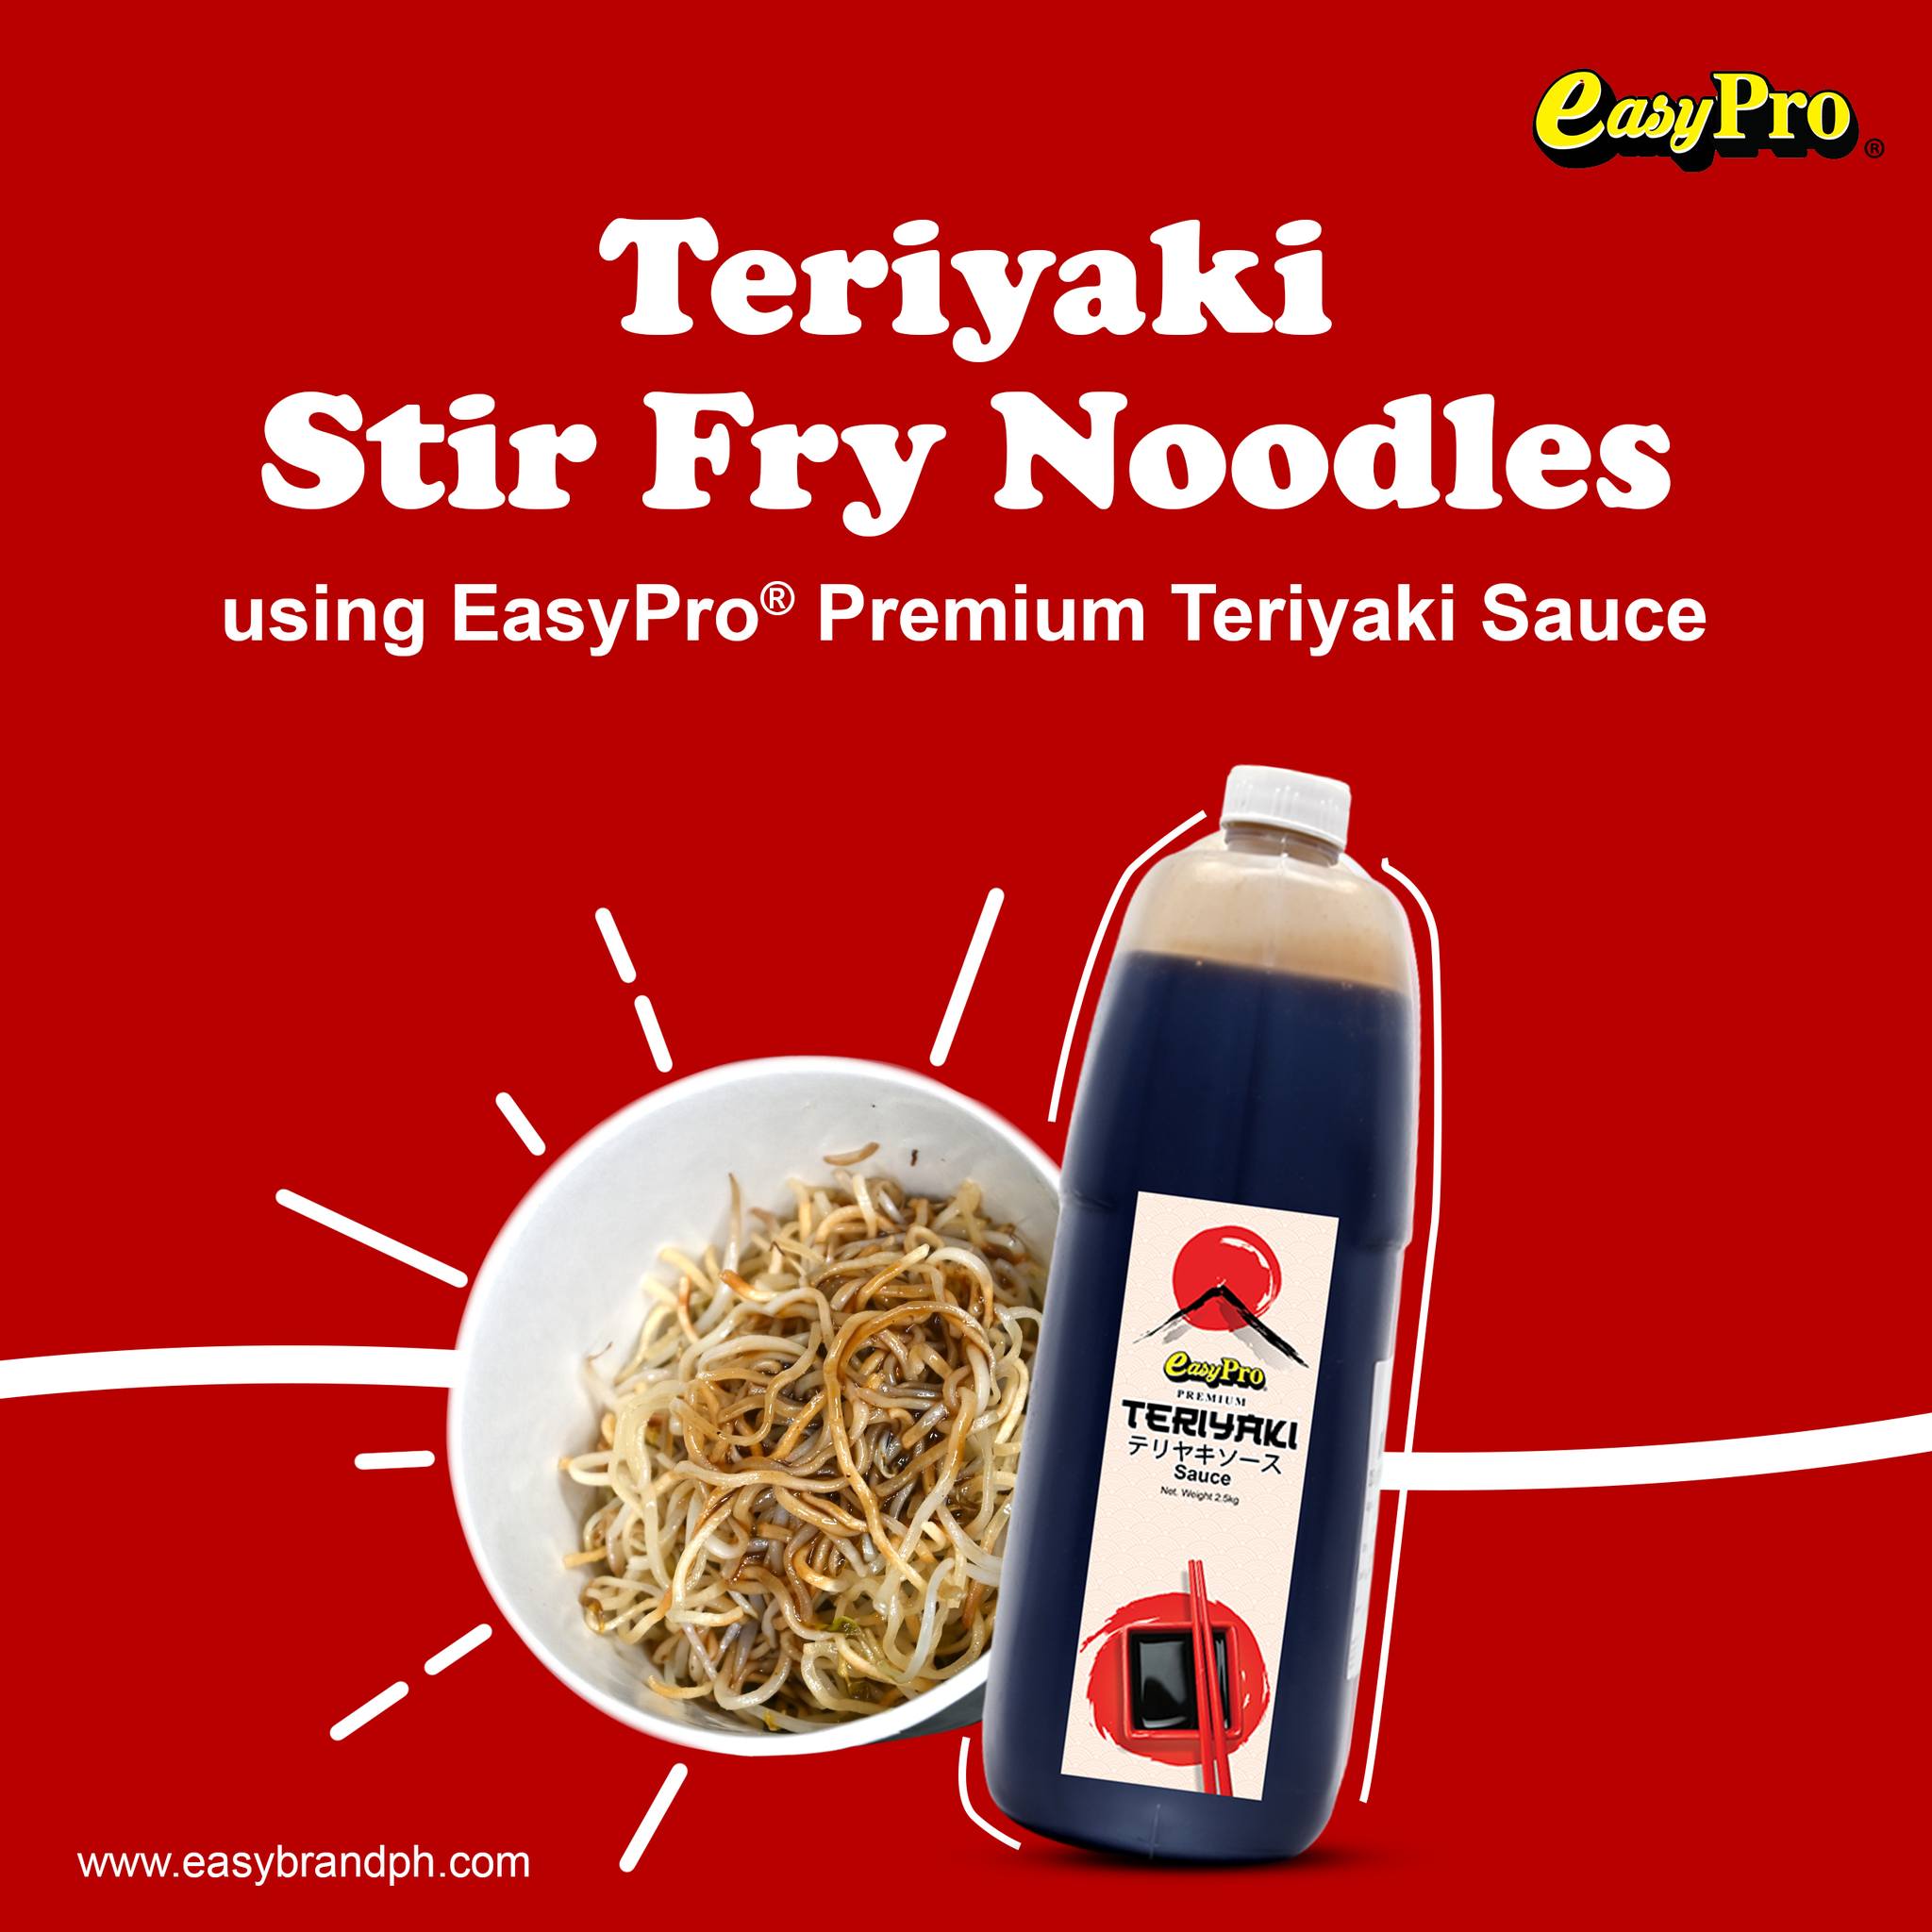 Teriyaki Stir Fry Noodles